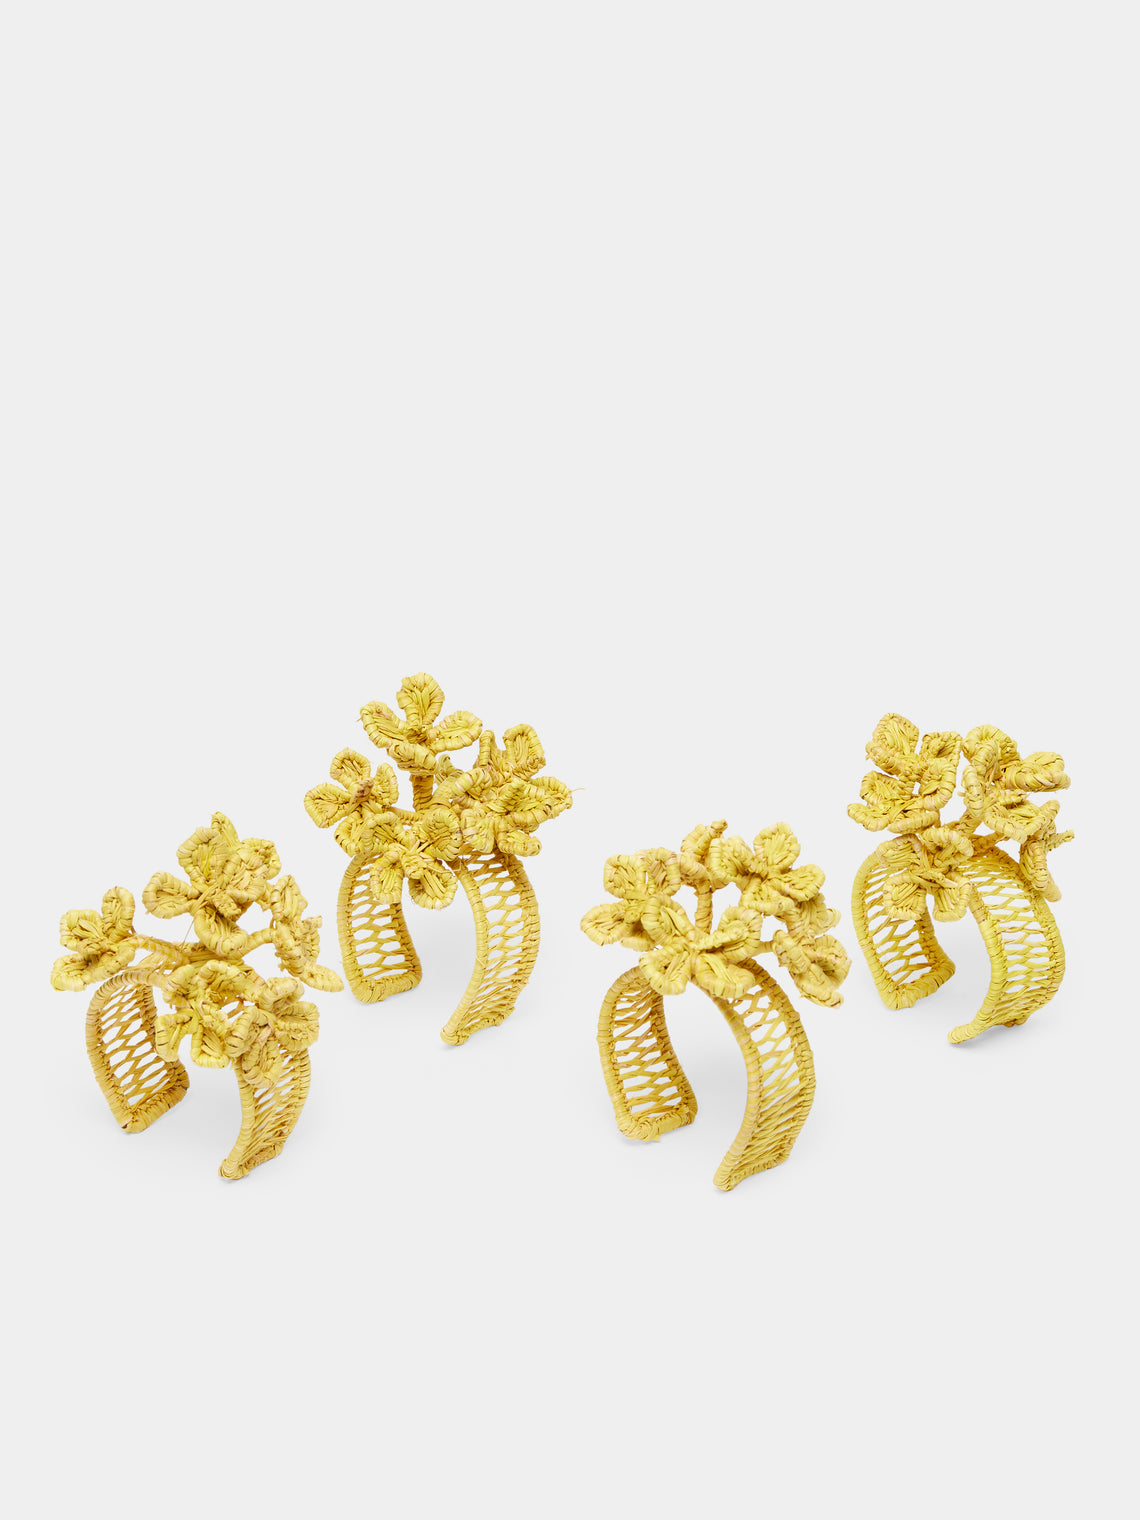 Artesanías del Atlántico - Coral Flower Handwoven Palm Napkin Rings (Set of 4) - Yellow - ABASK